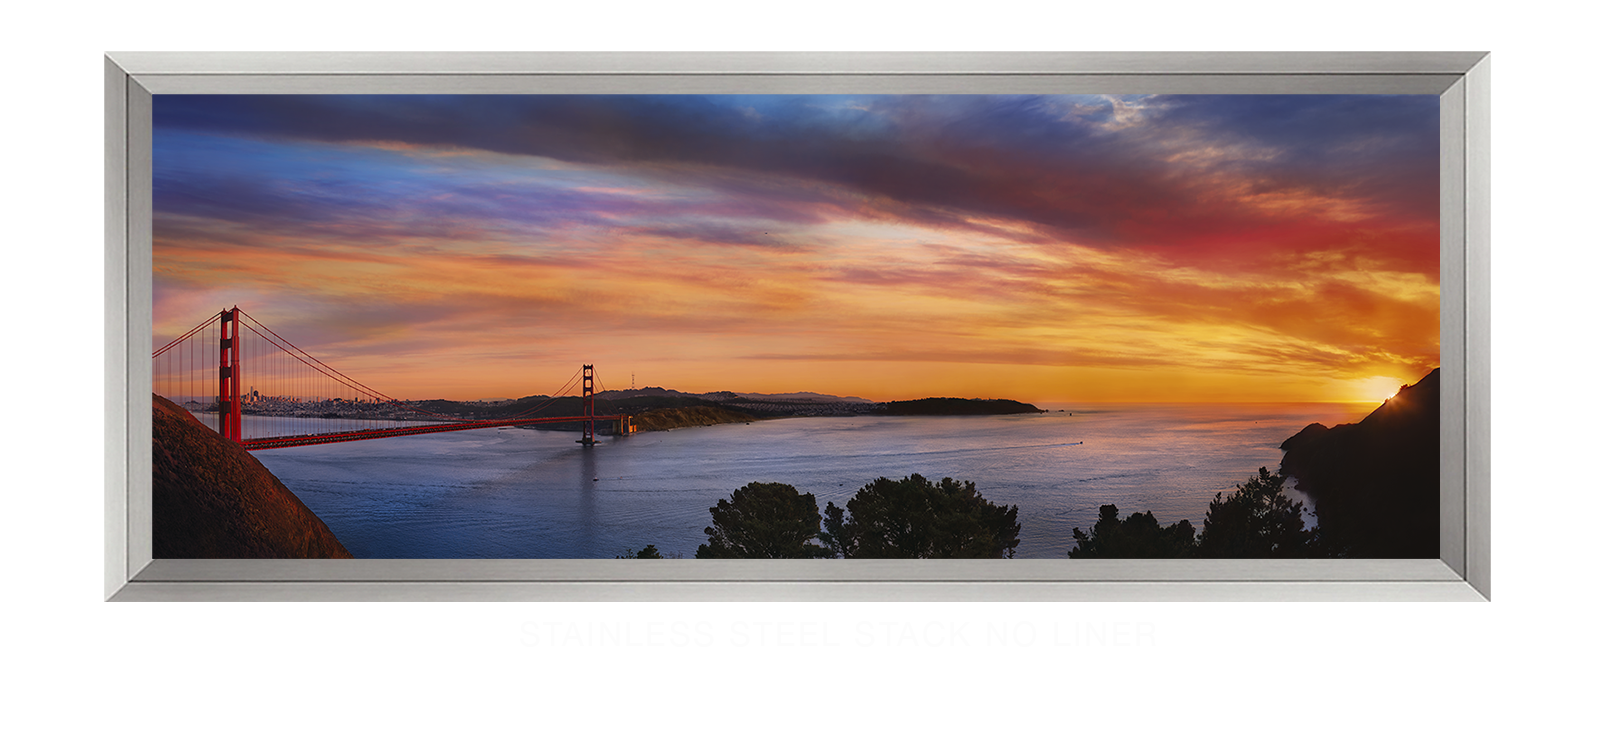 7GoldenGateBridge Stainless Steel Stack No Liner T